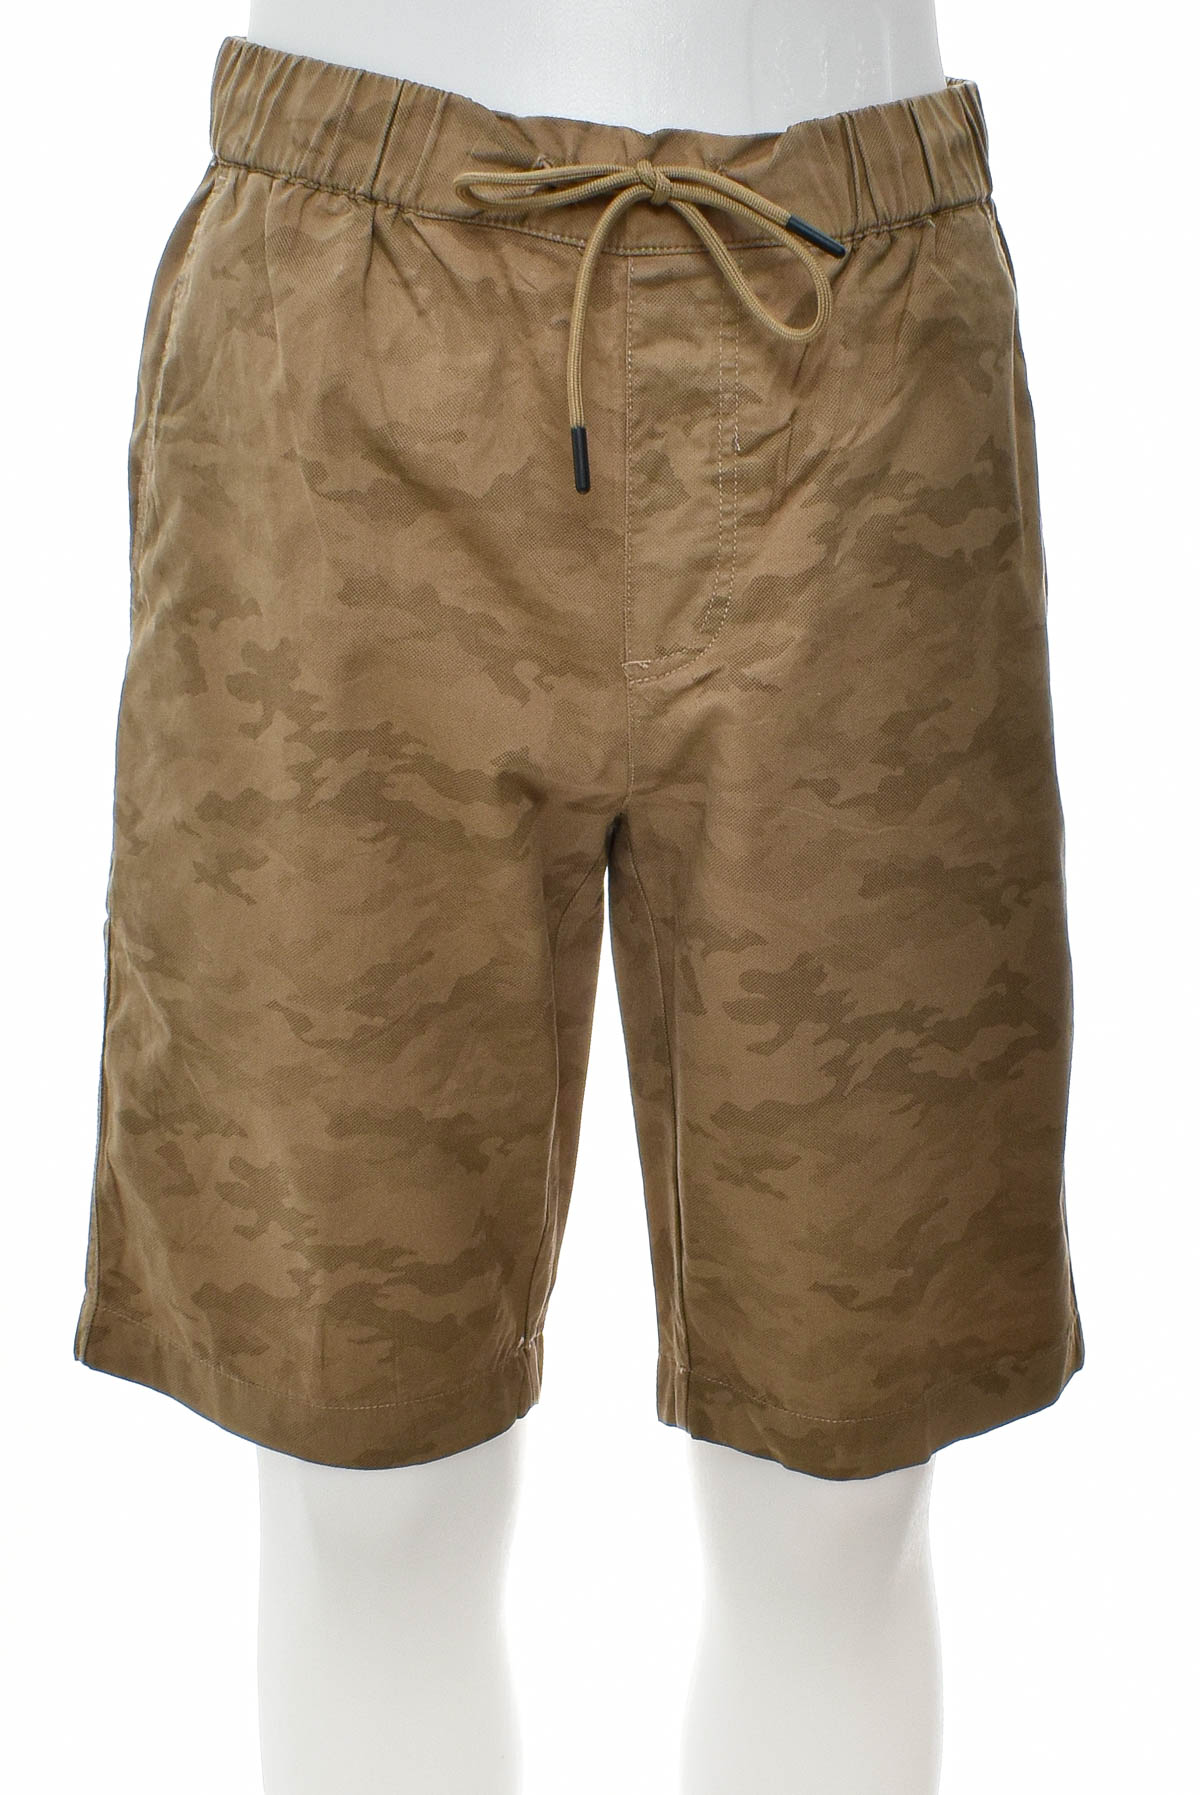 Men's shorts - Giordano - 0